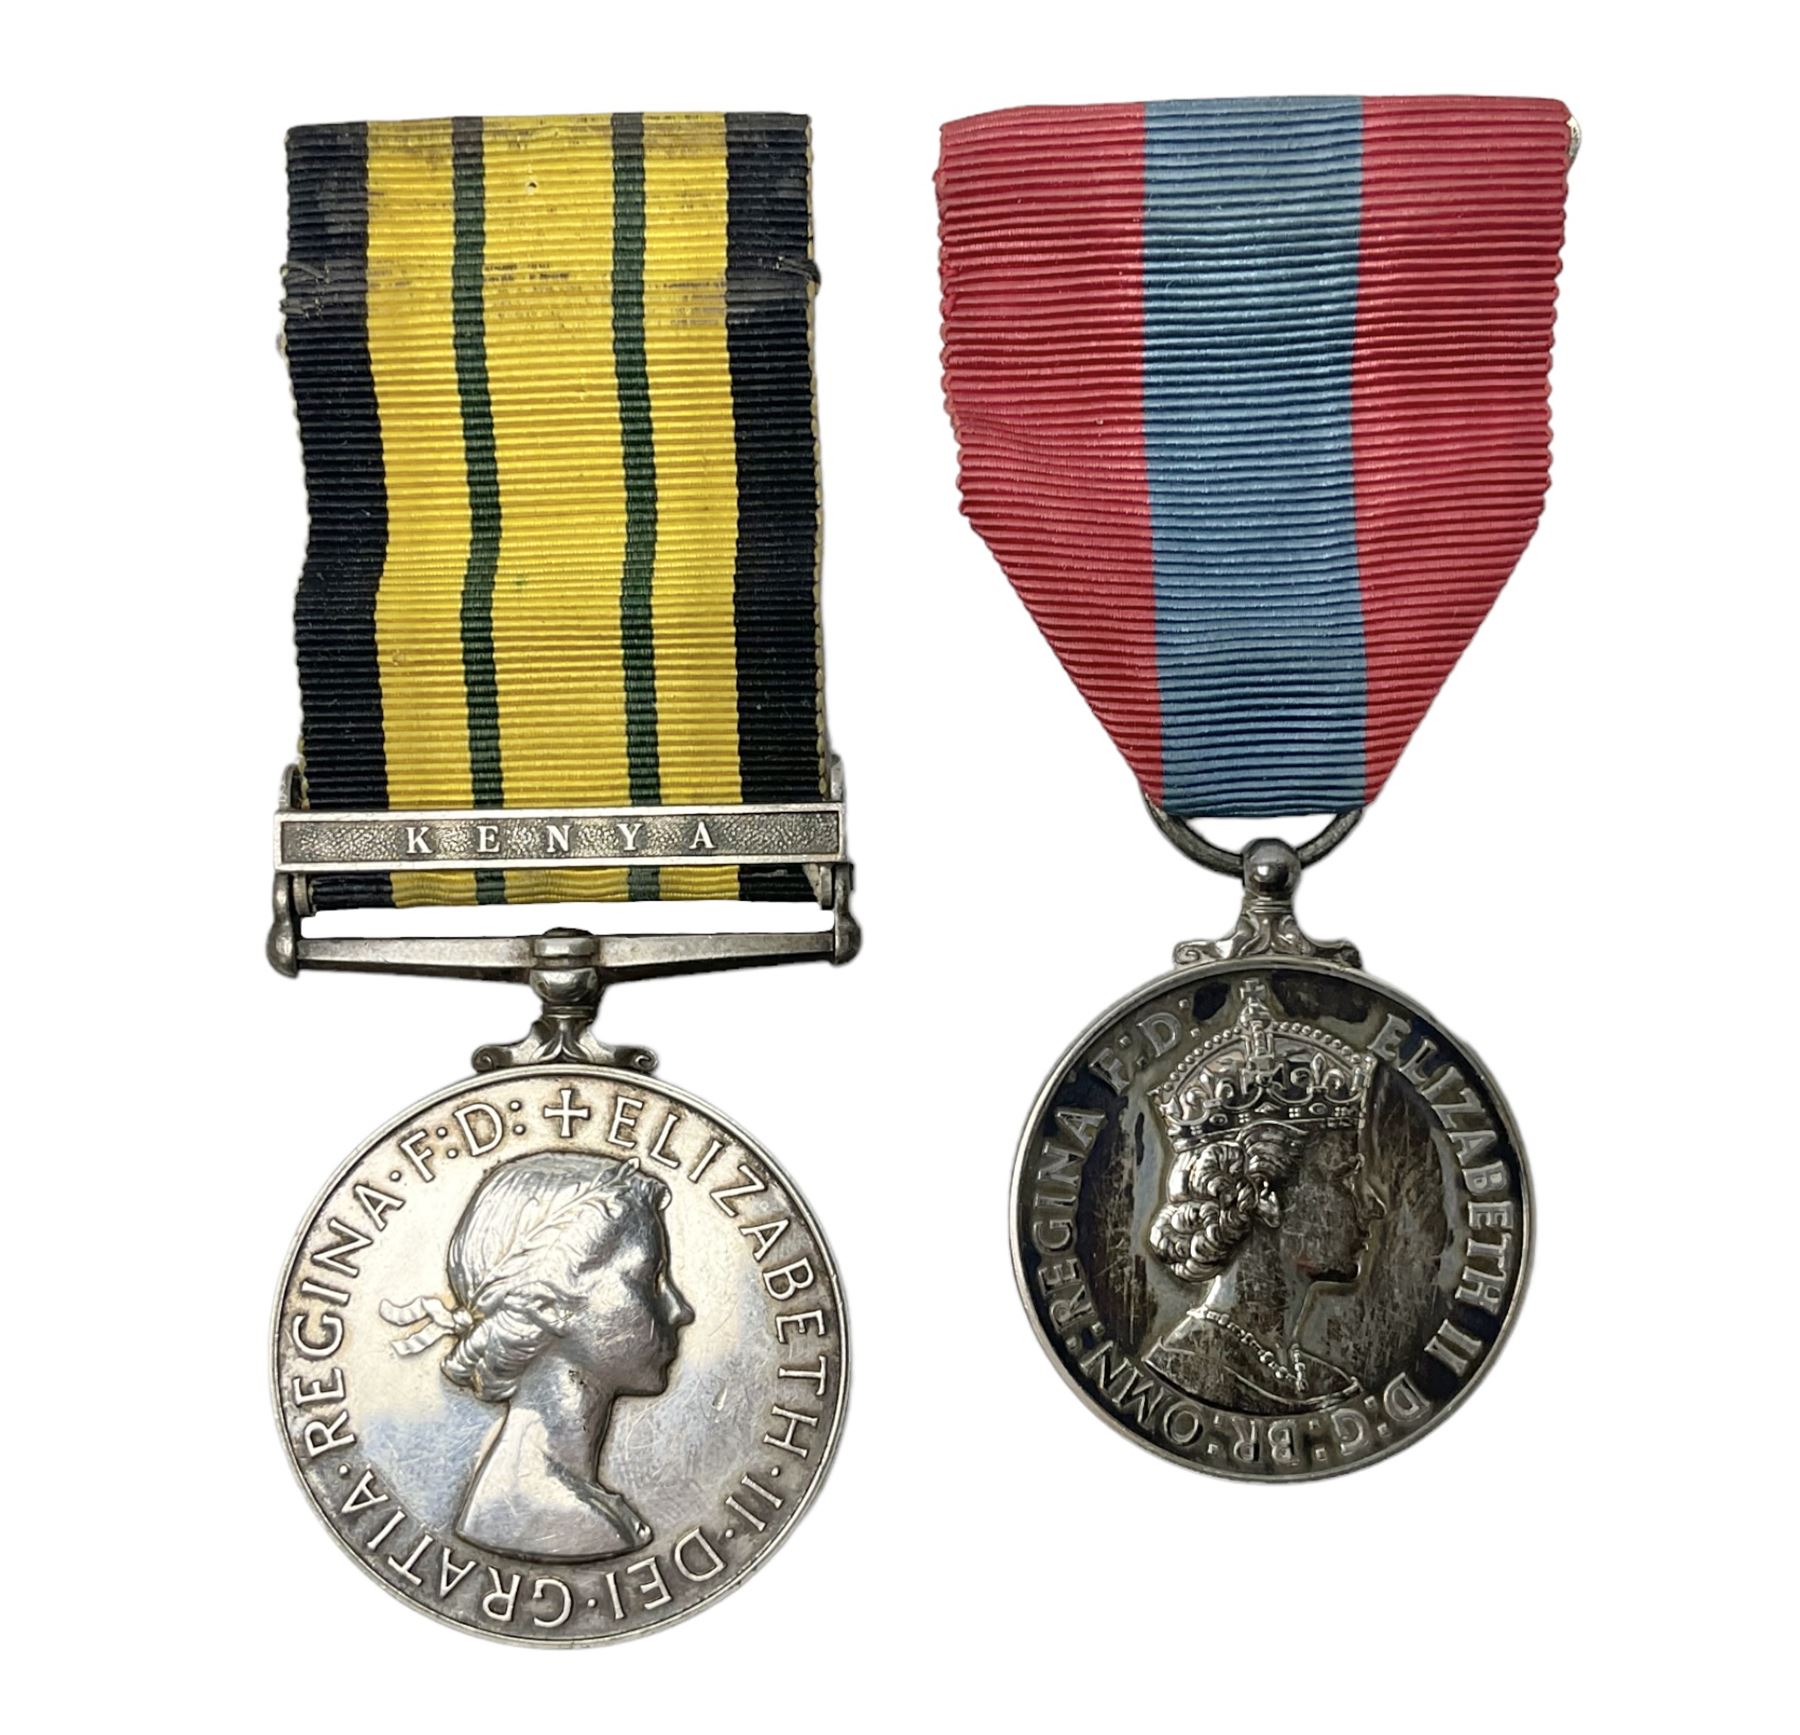 Elizabeth II Africa General Service Medal with Kenya clasp awarded to 22995278 Spr. D. Penrose R.E.;